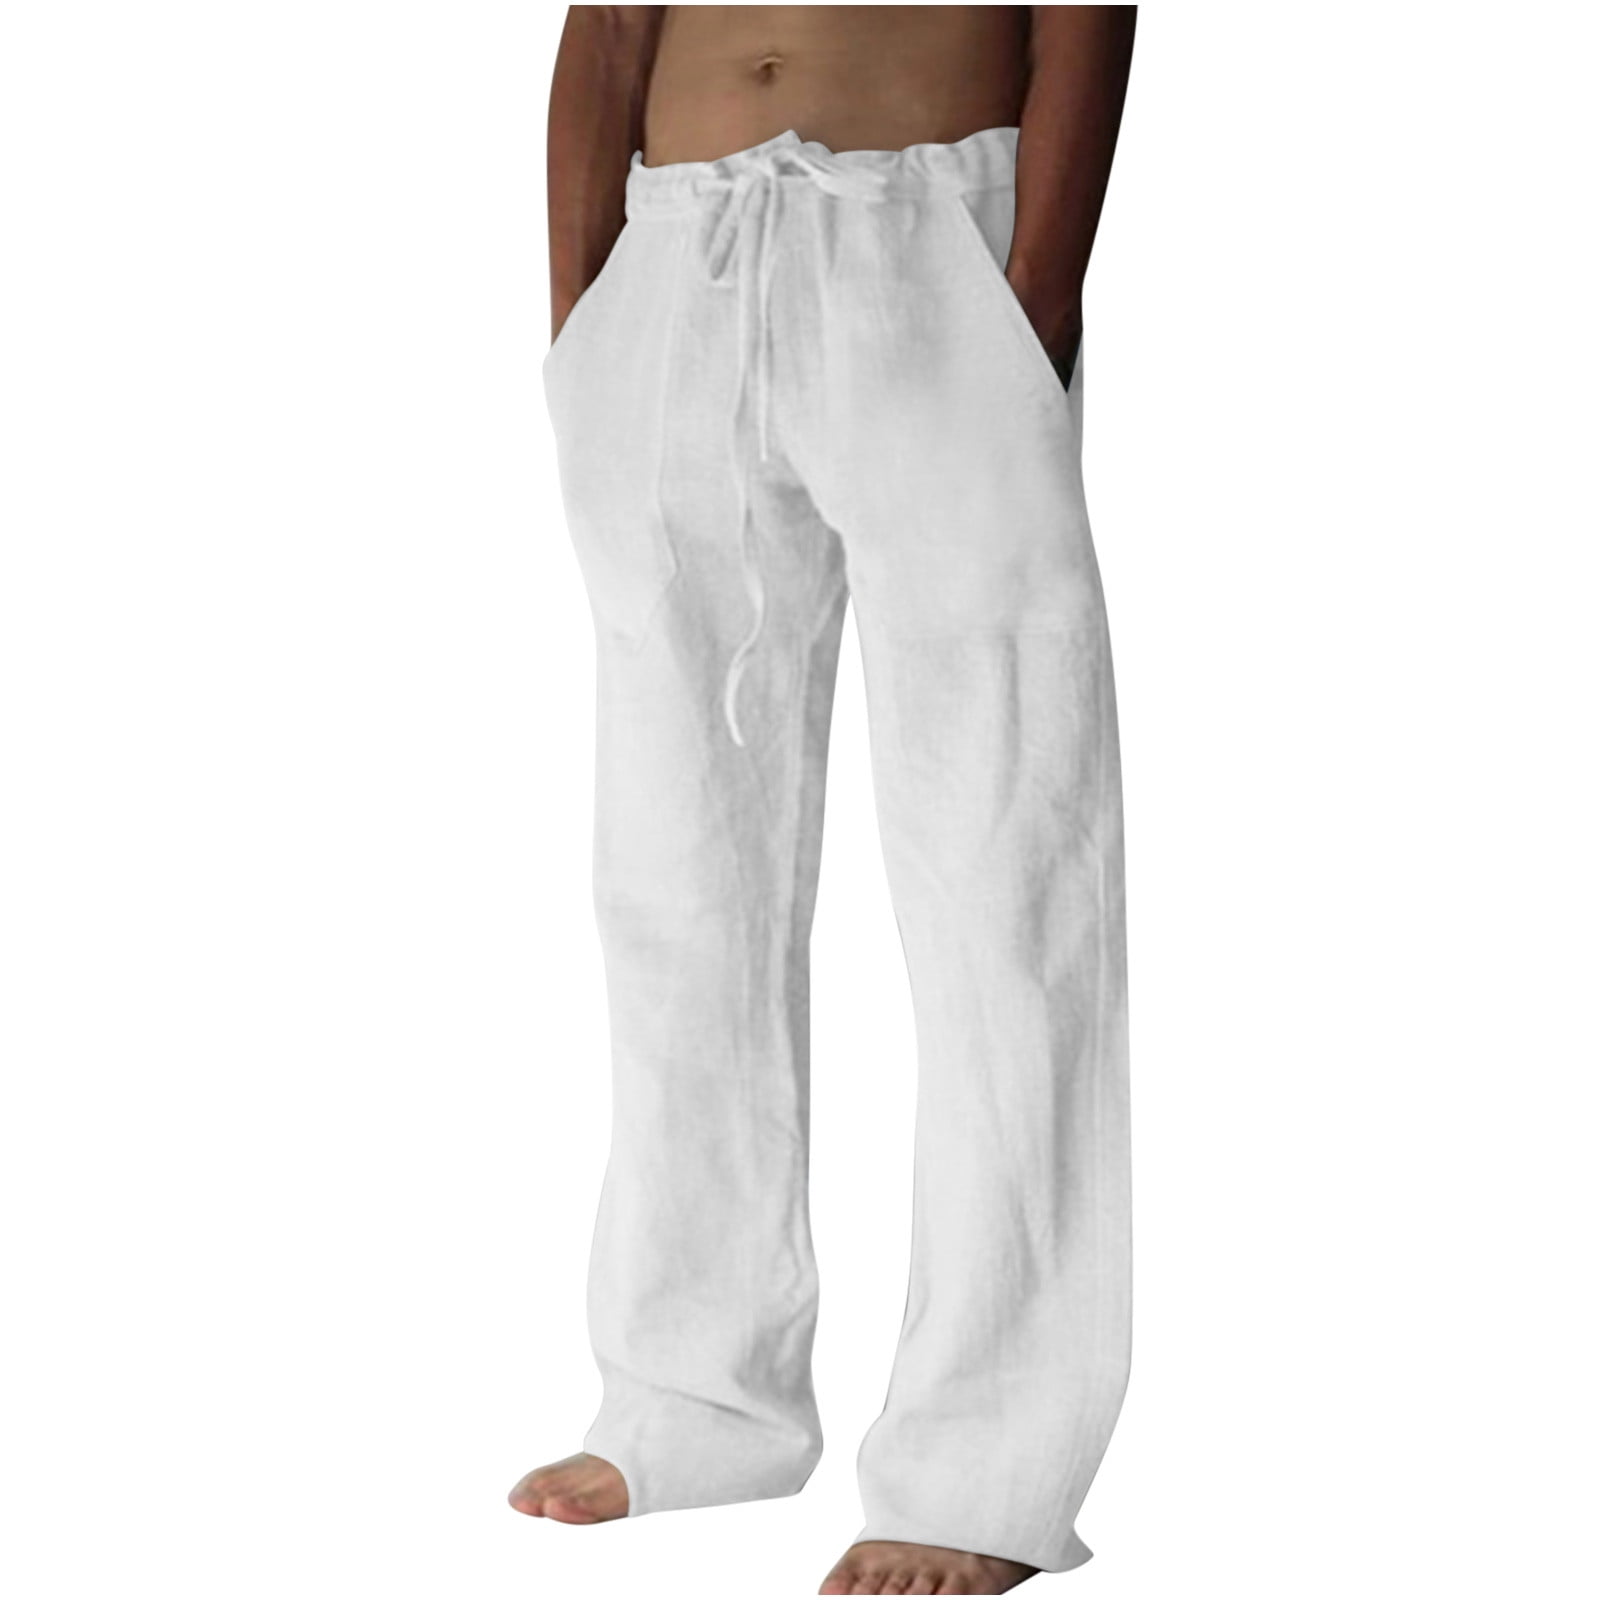 Drawstring Pants for Men 100% Cotton Gauze.